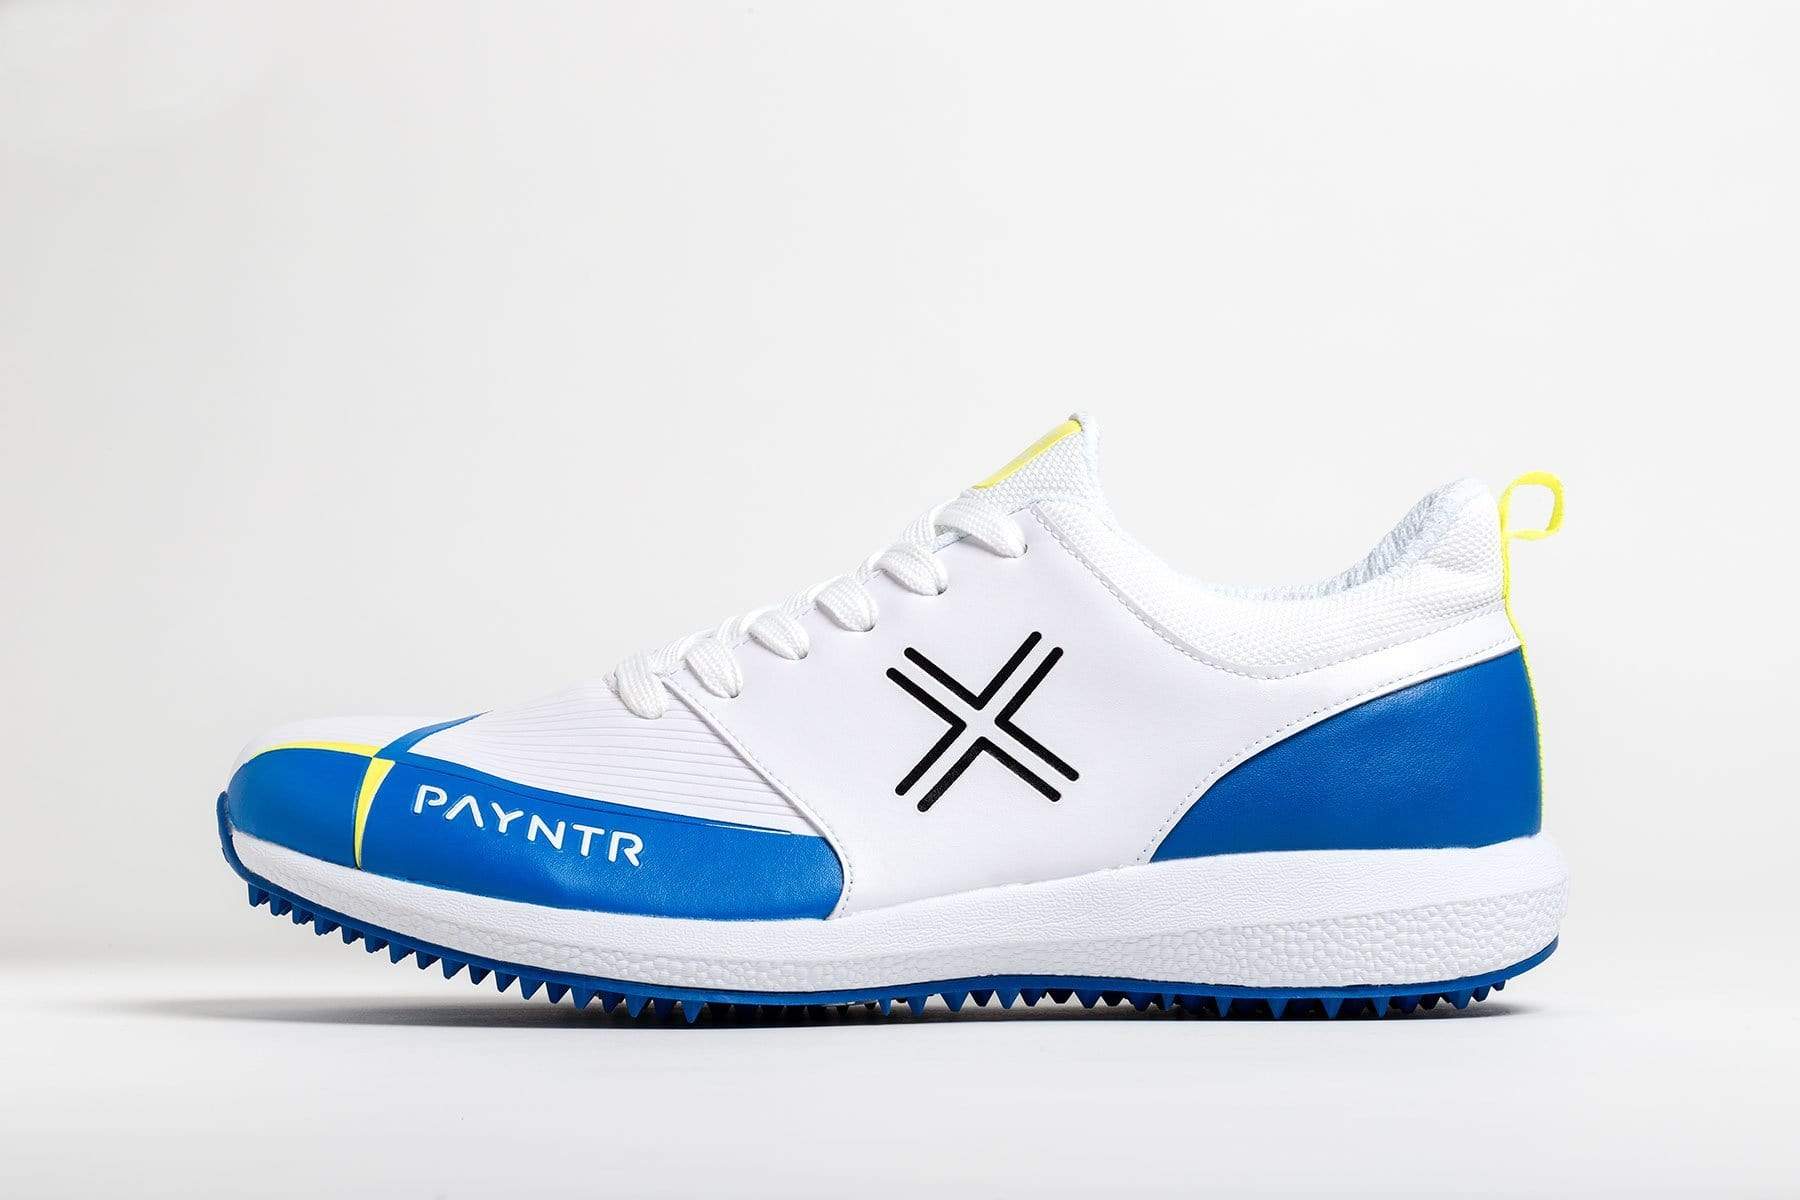 Payntr Footwear 4.5 / White/Blue Payntr V Spike Cricket Shoes 2021